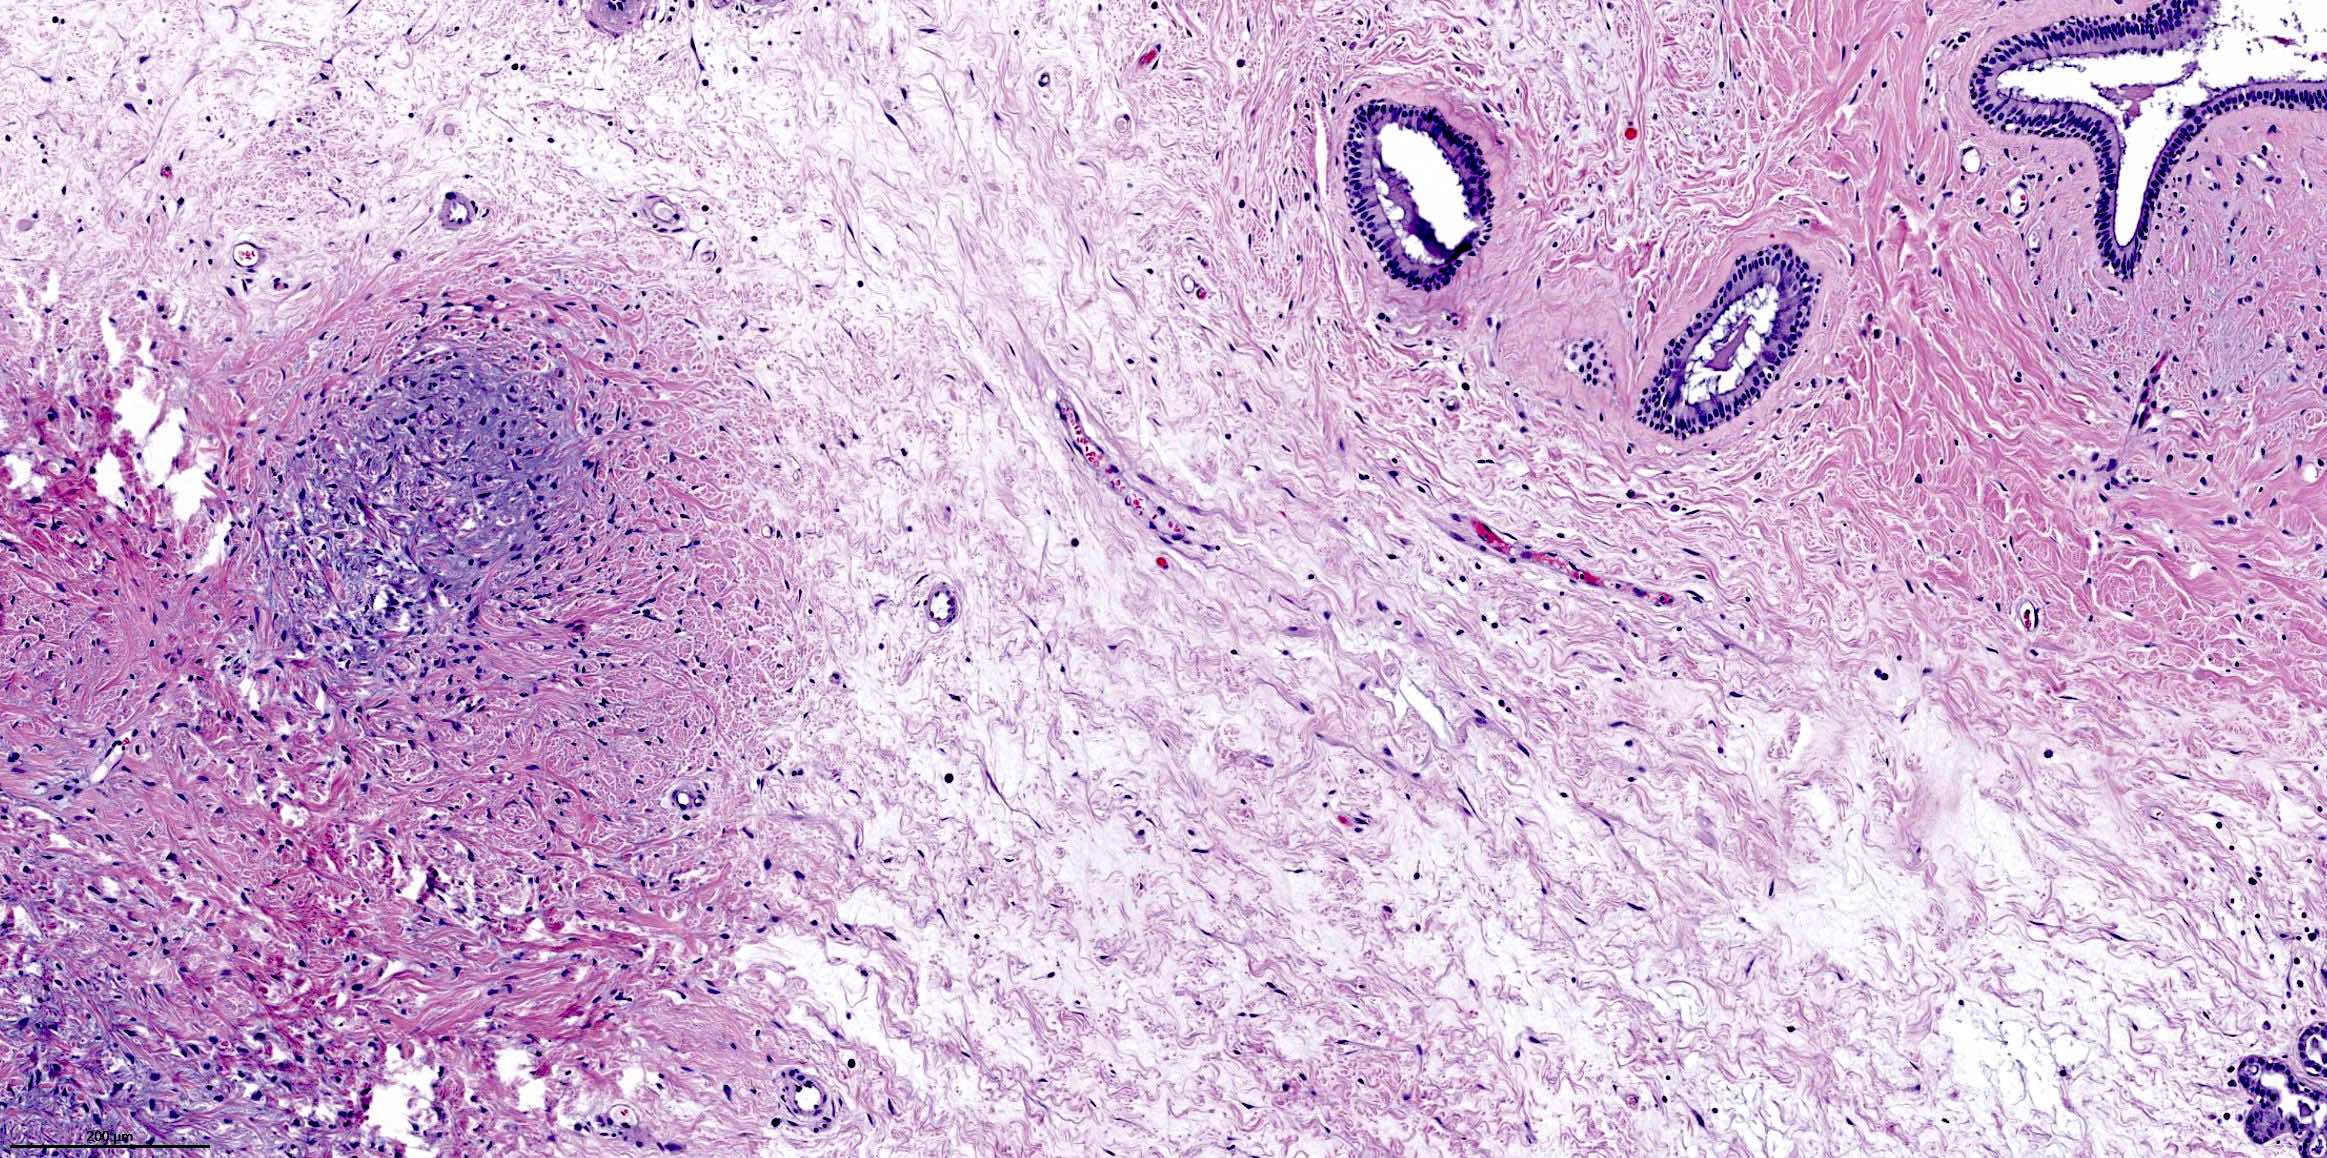 Myxoid mesenchyme and gland